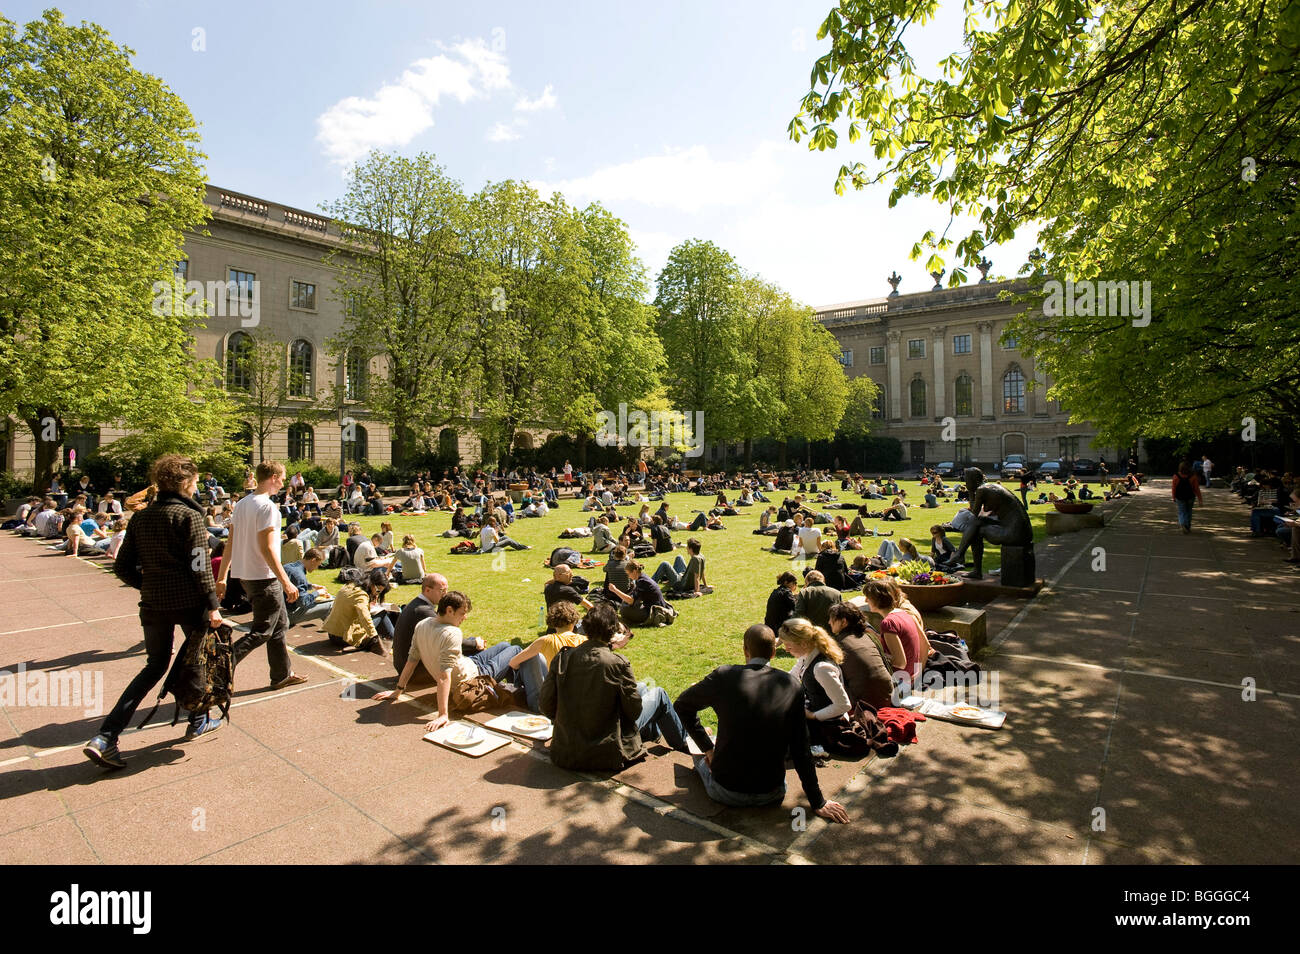 Students on campus of Humboldt University, Berlin, Germany, Europe Stock Photo